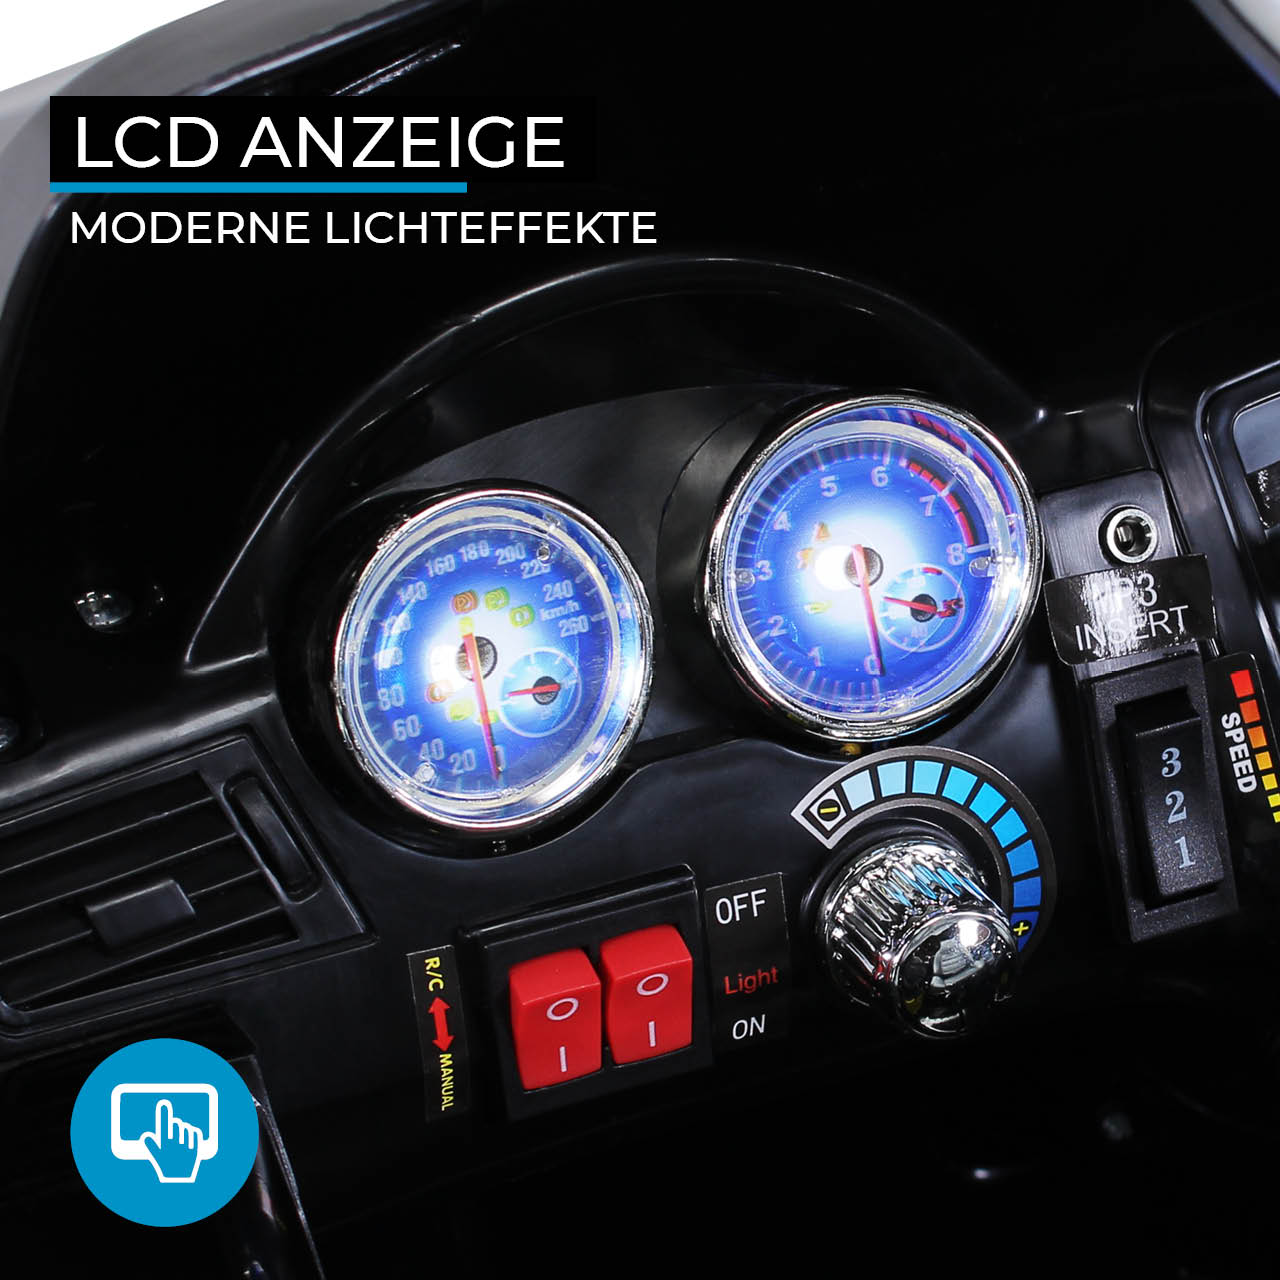 Elektroauto ML MOTORS Lizenziert ACTIONBIKES Mercedes-Benz 350